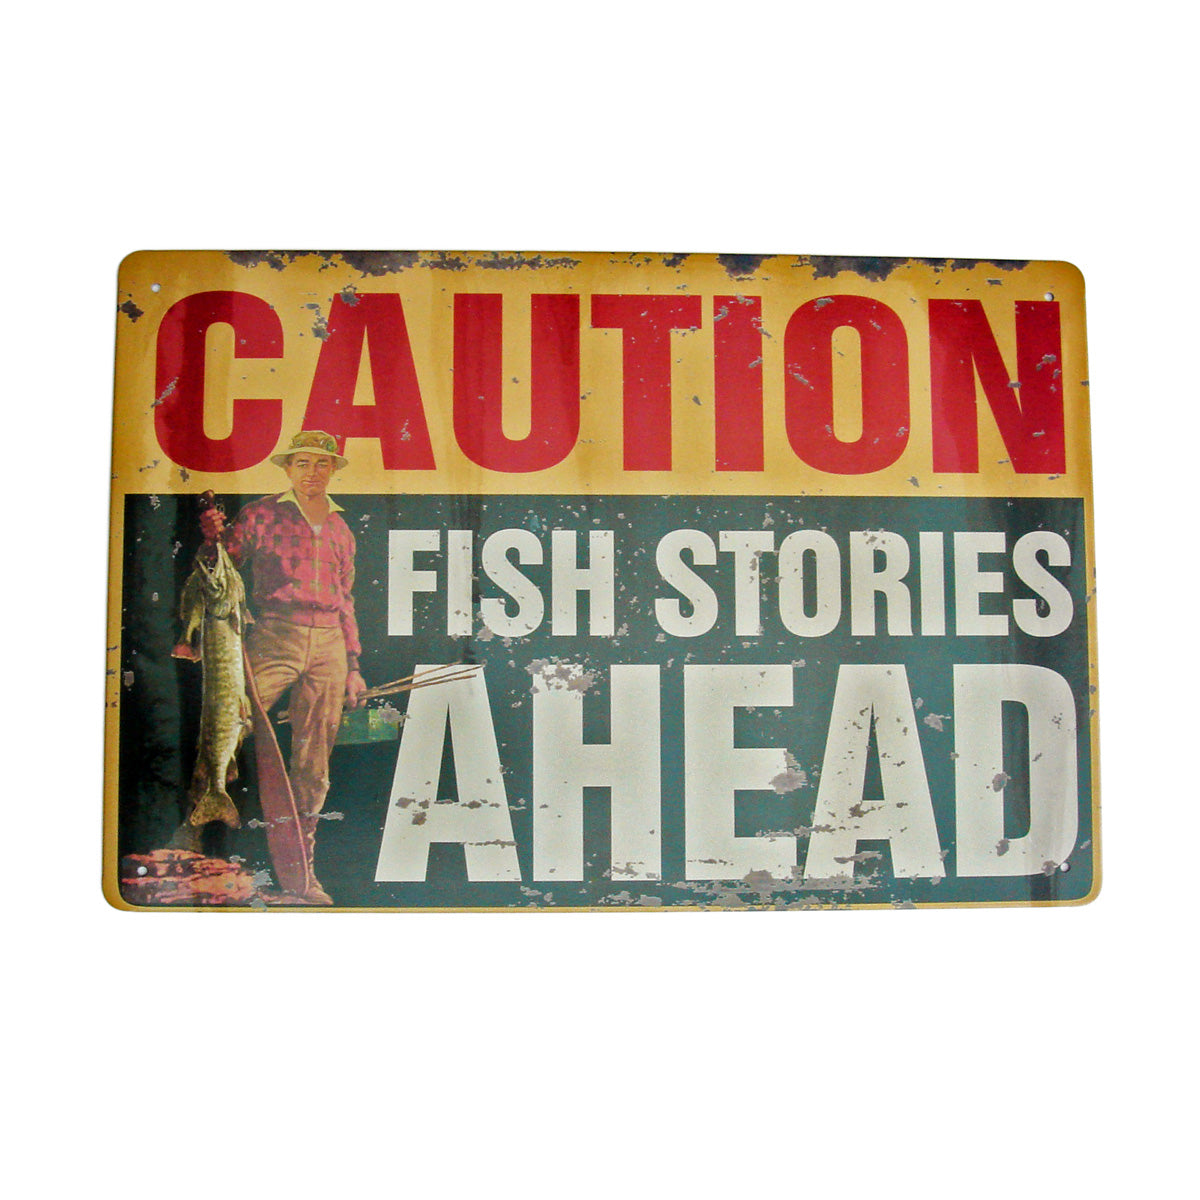 Warning Fish Stories Ahead Funny Metal Fishing Sign Home Wall